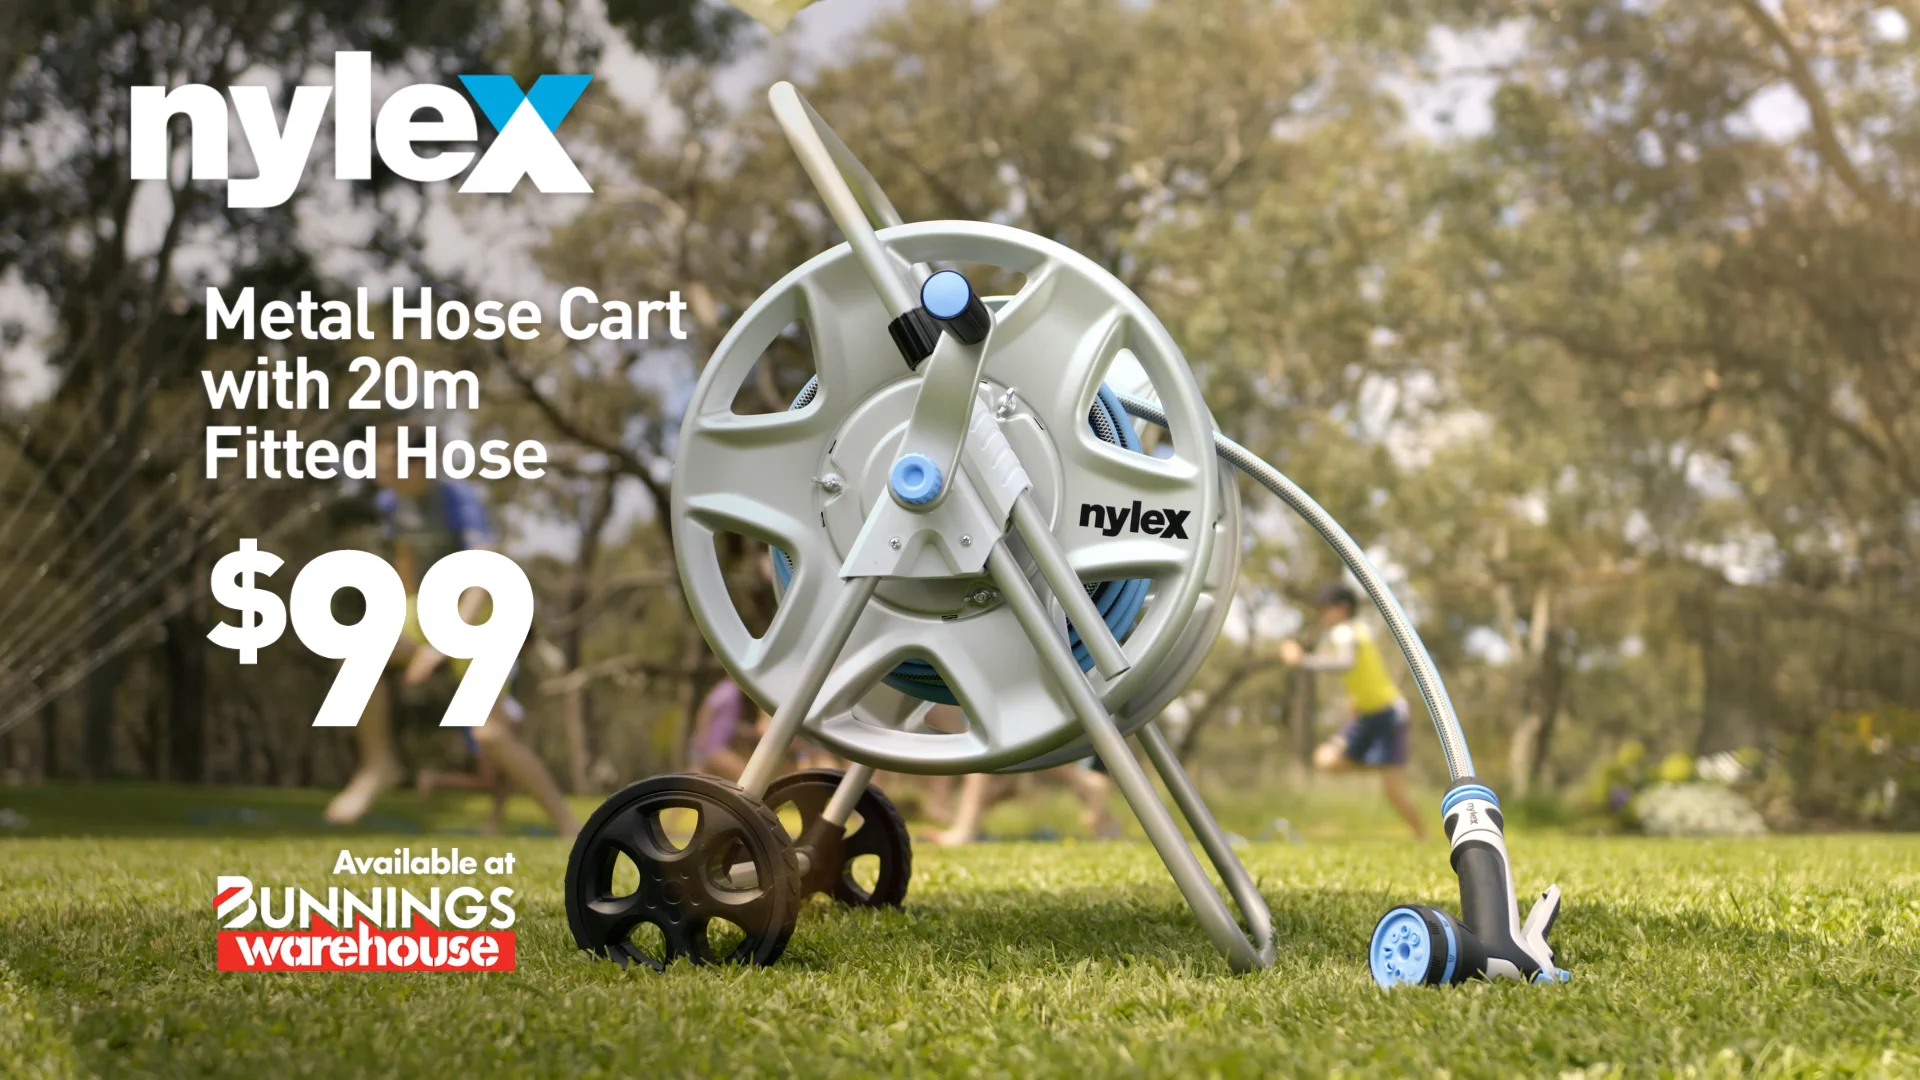 Nylex Metal Hose cart TVC on Vimeo